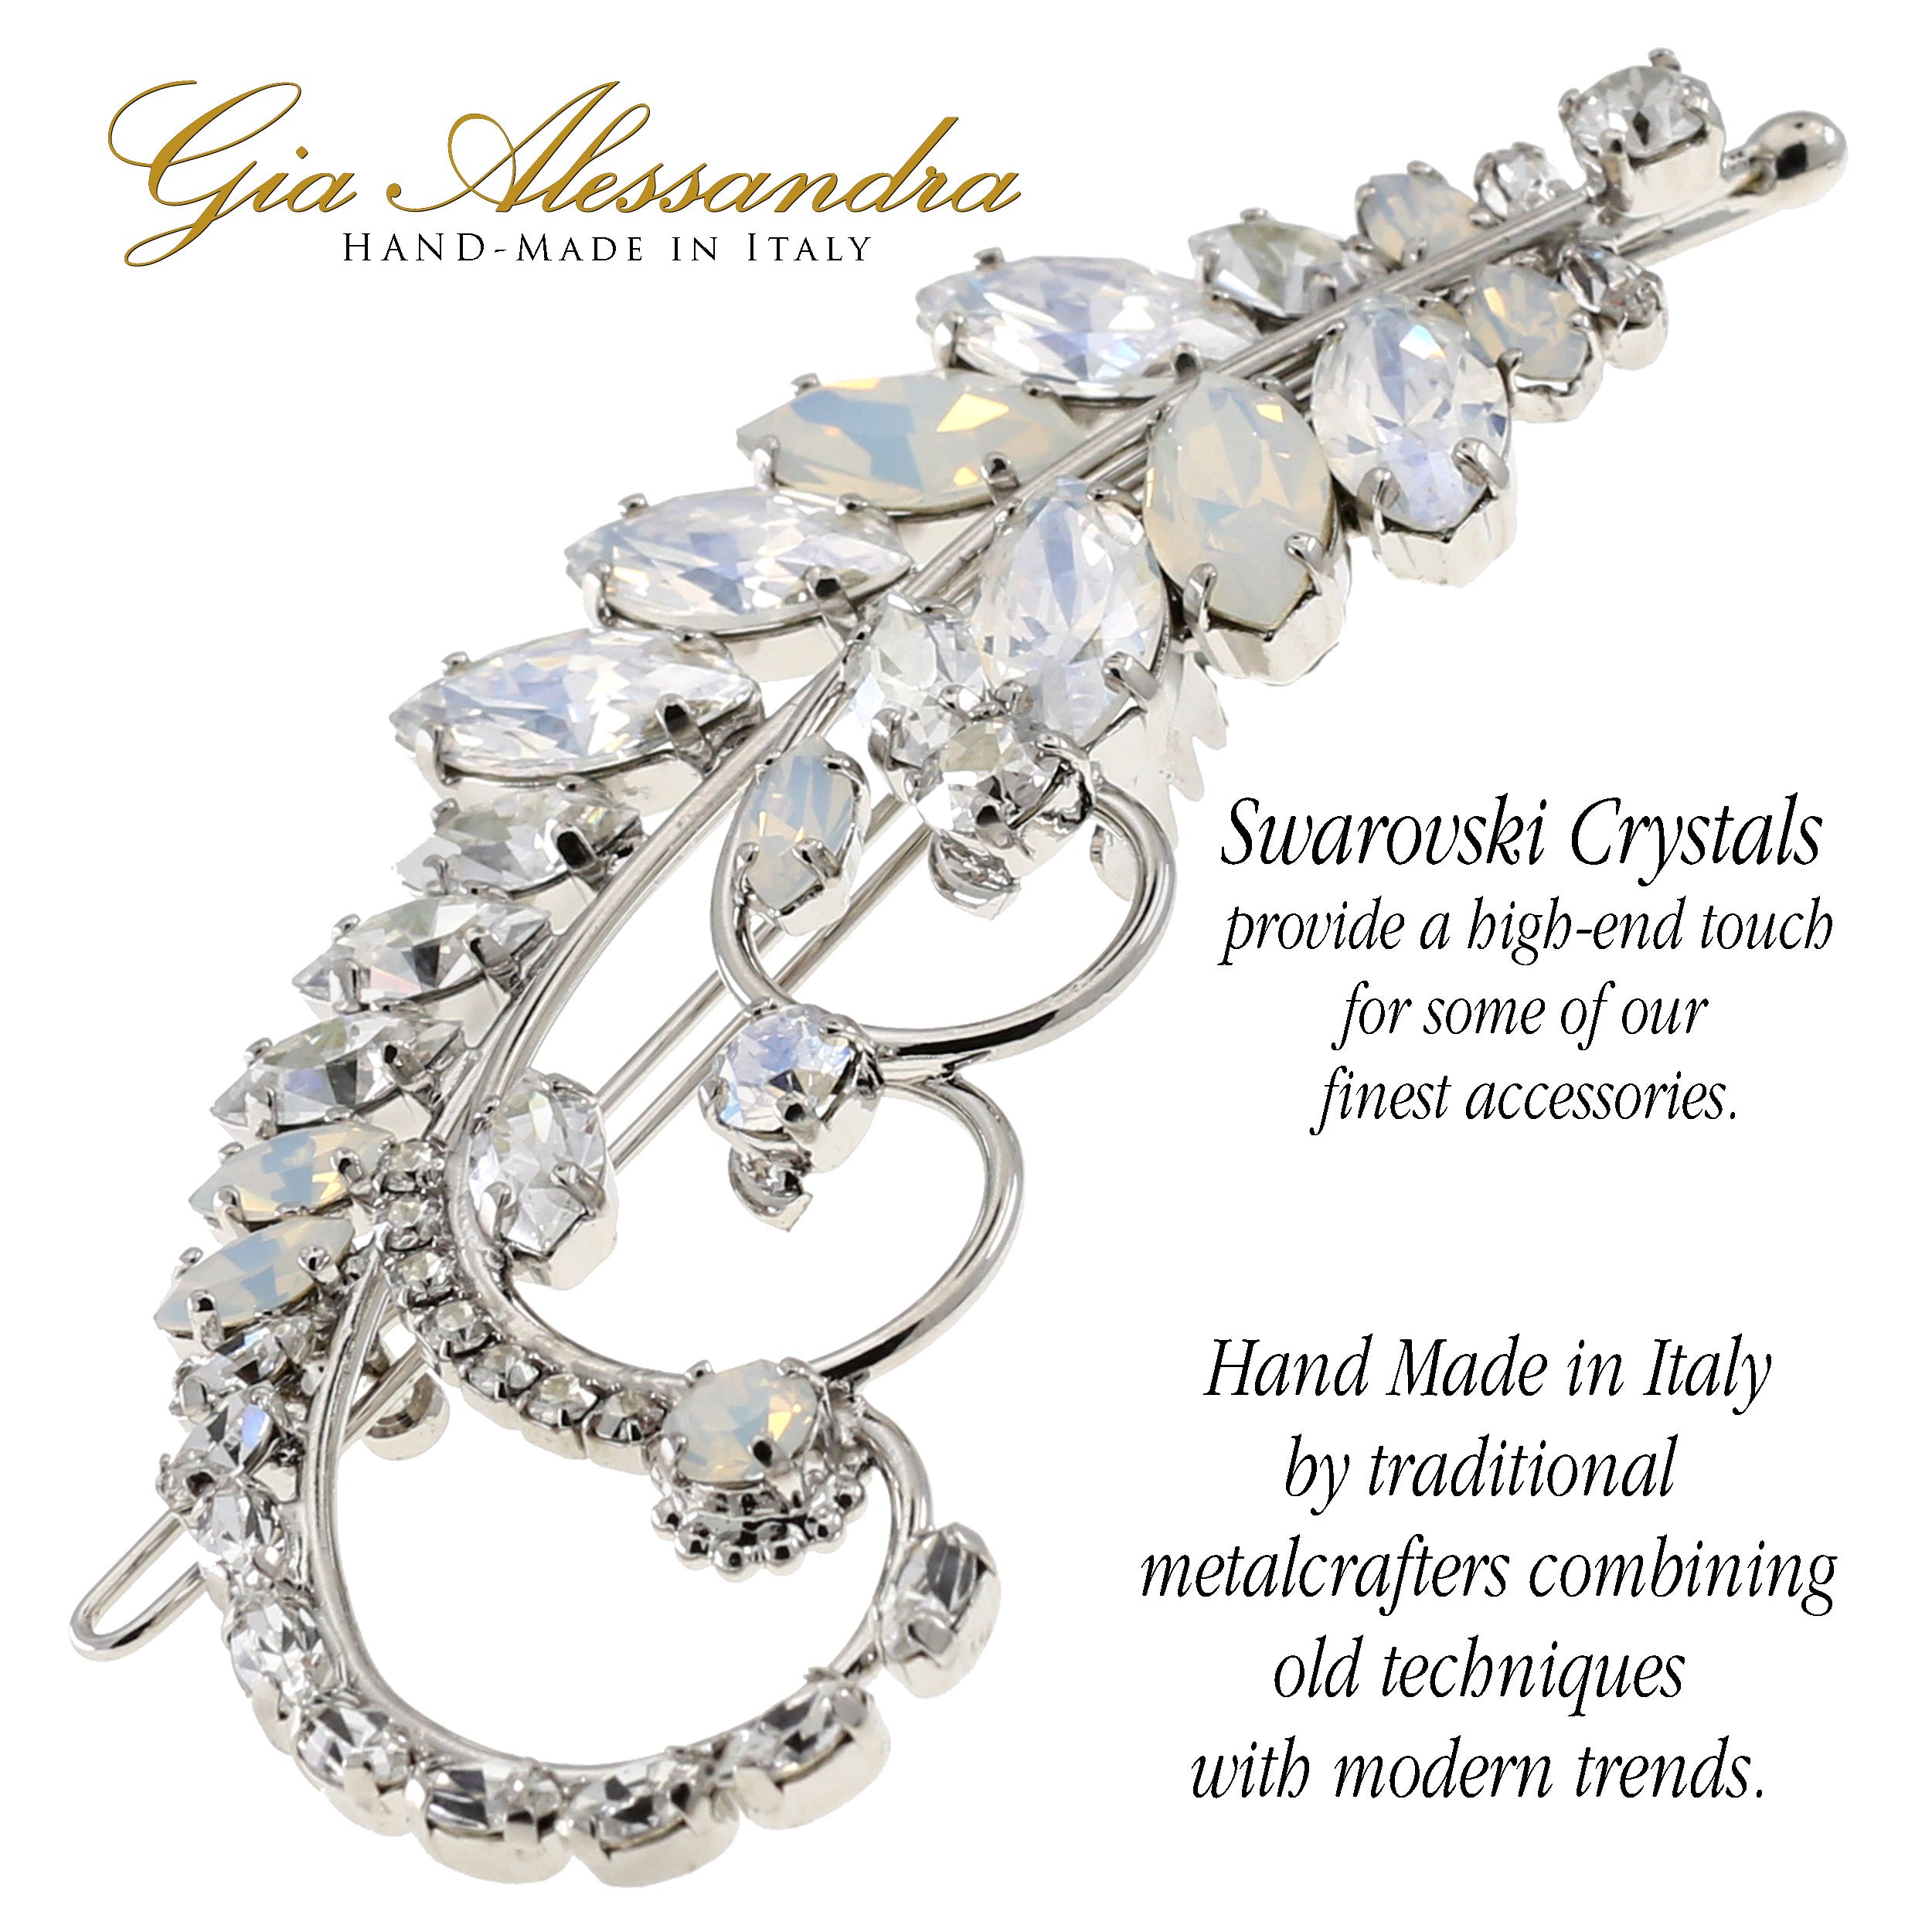 GIA Alessandra GA261 4.75 inch Wedding Bridal Large U-Shape Hairpins Twist Stick Pins Silver with Swarovski Crystals